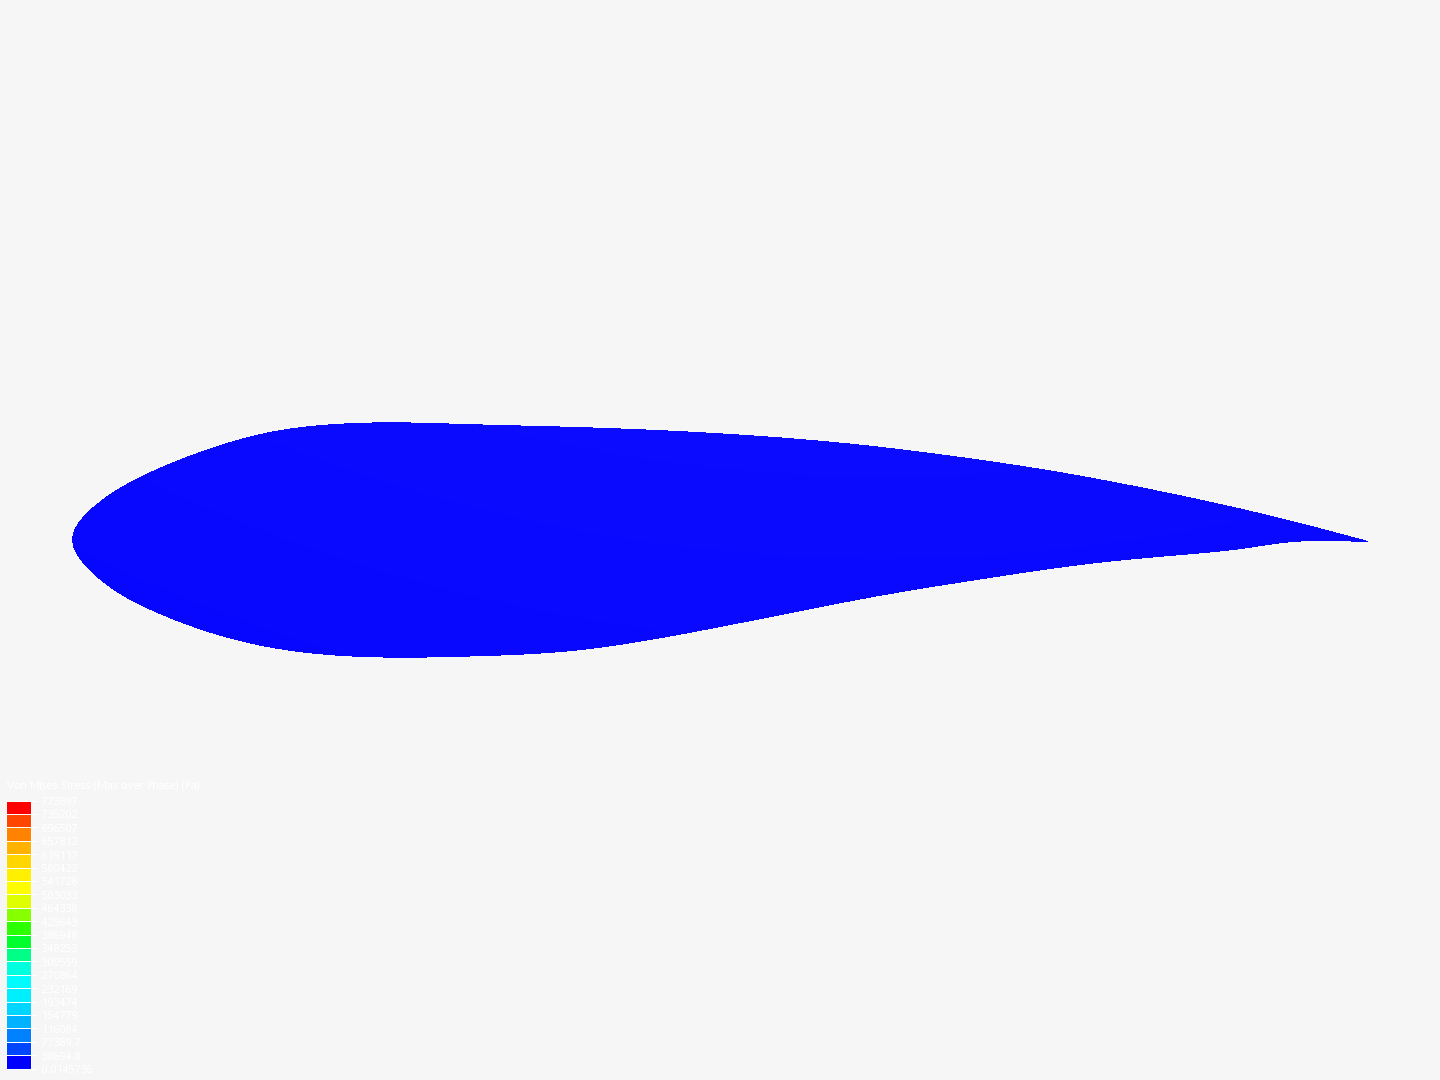 harmonics of a wing - Copy - Copy image